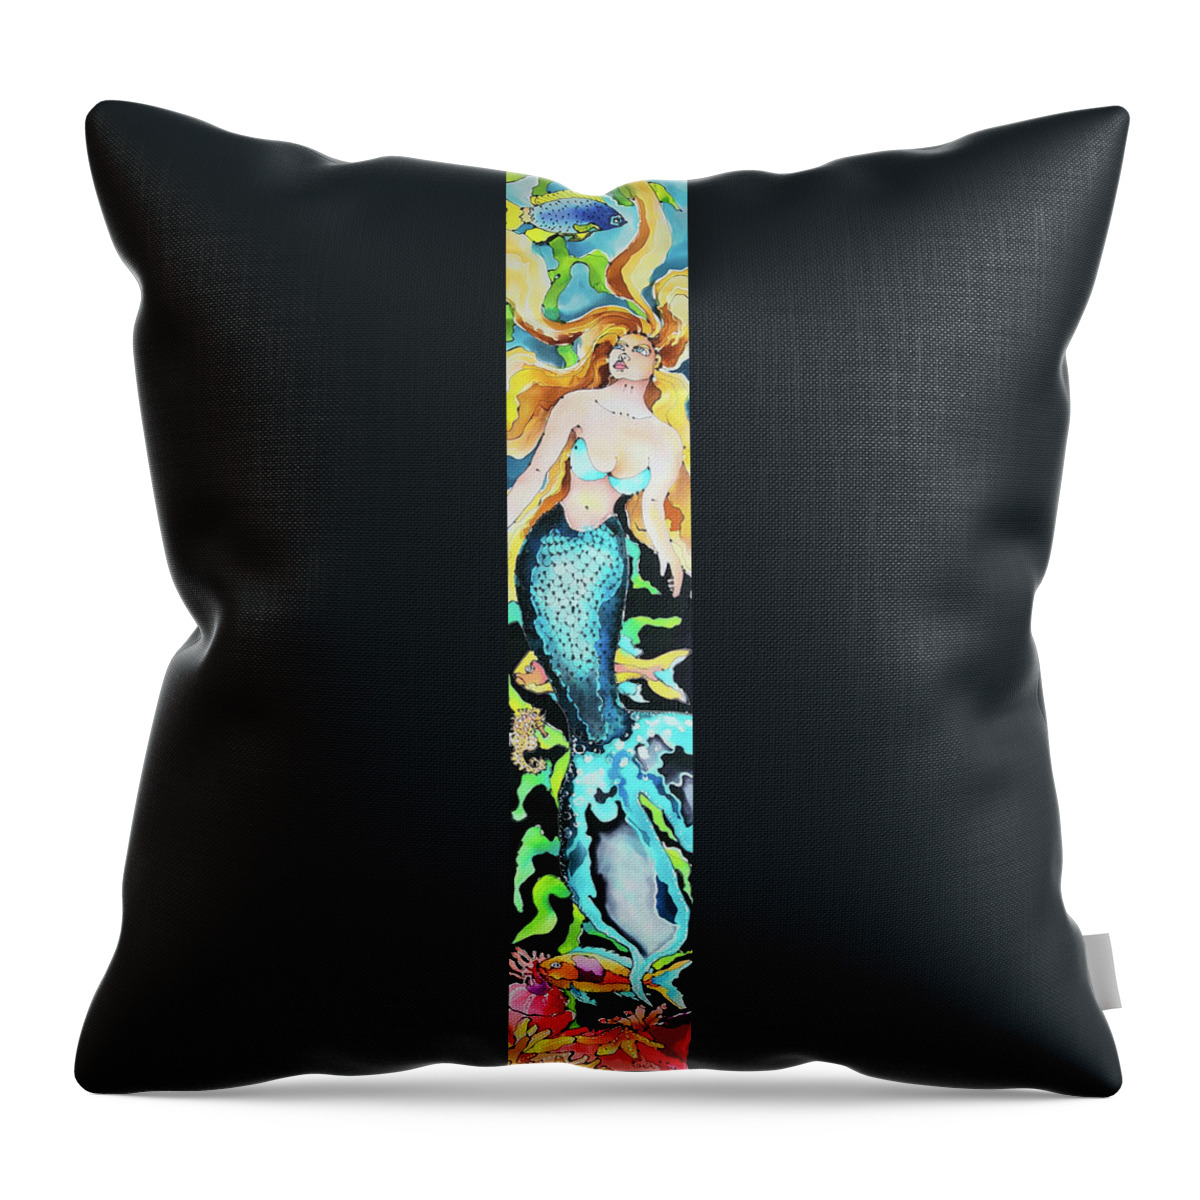 Karlakayart Throw Pillow featuring the painting Turquoise Mermaid by Karla Kay Benjamin